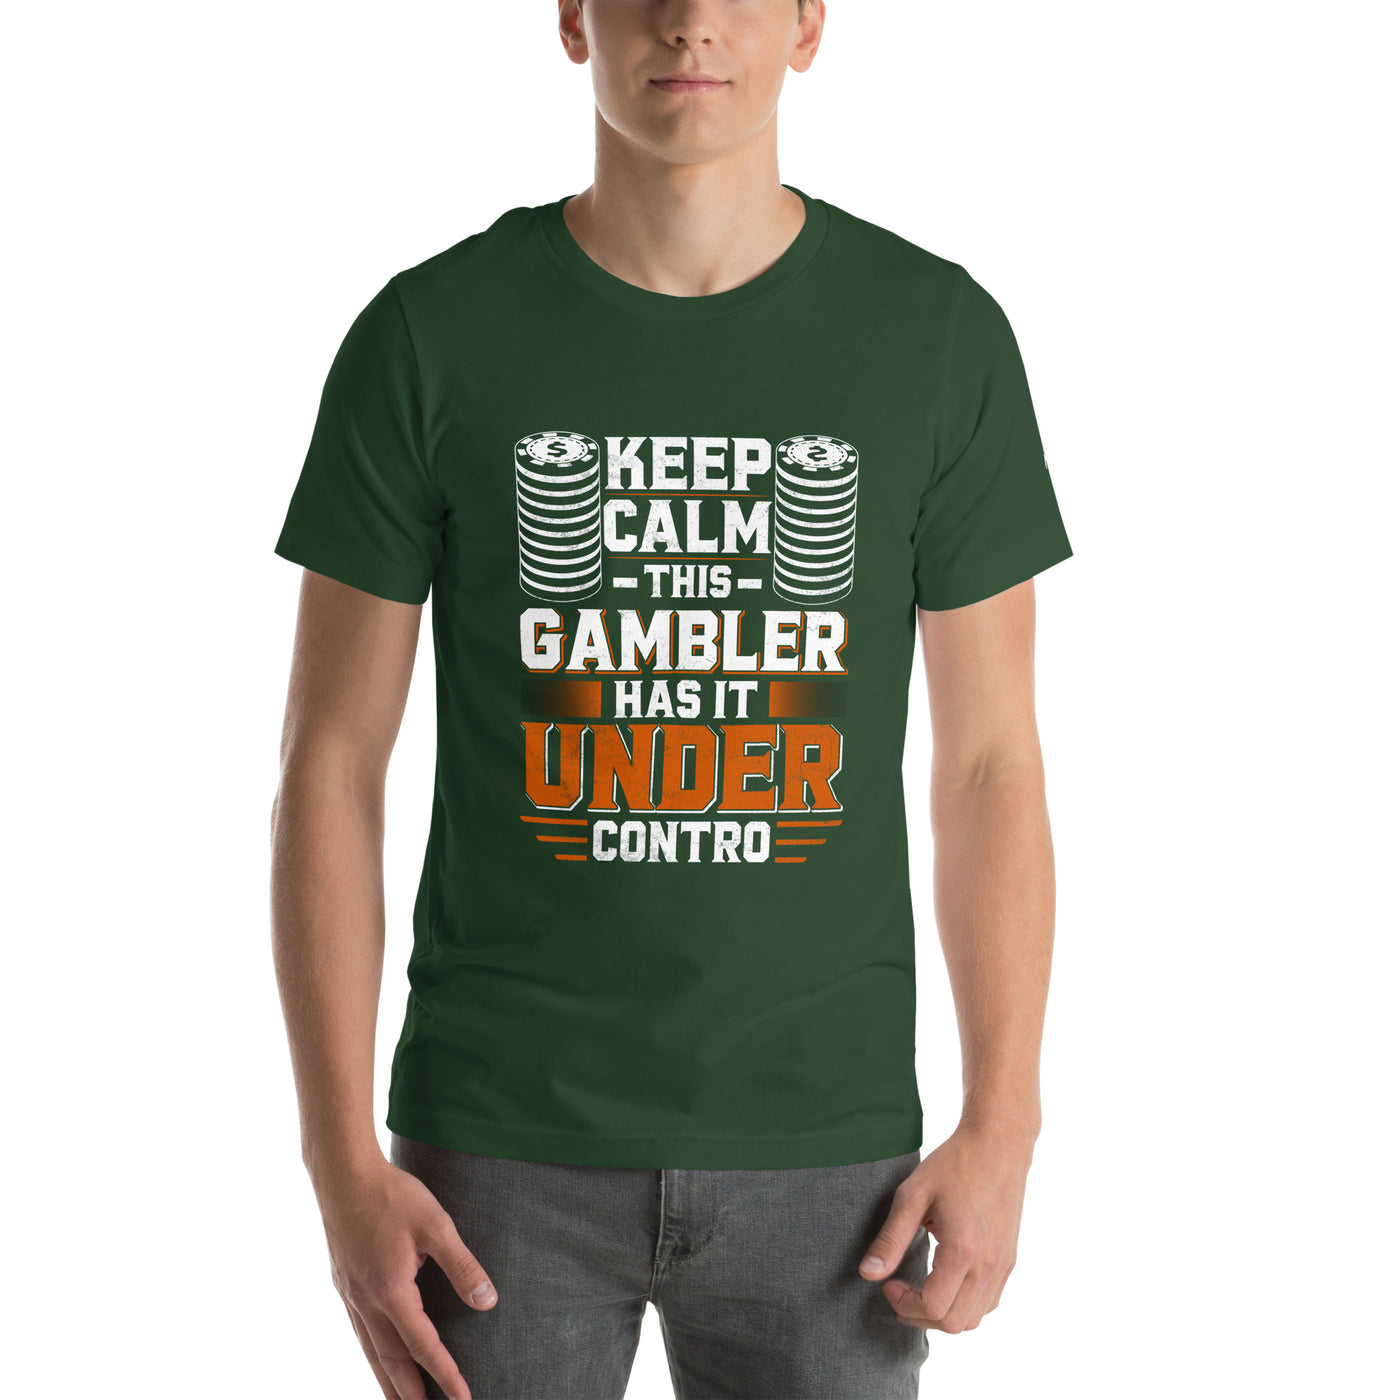 Keep Calm: This Gambler Has it under Control - Unisex t-shirt